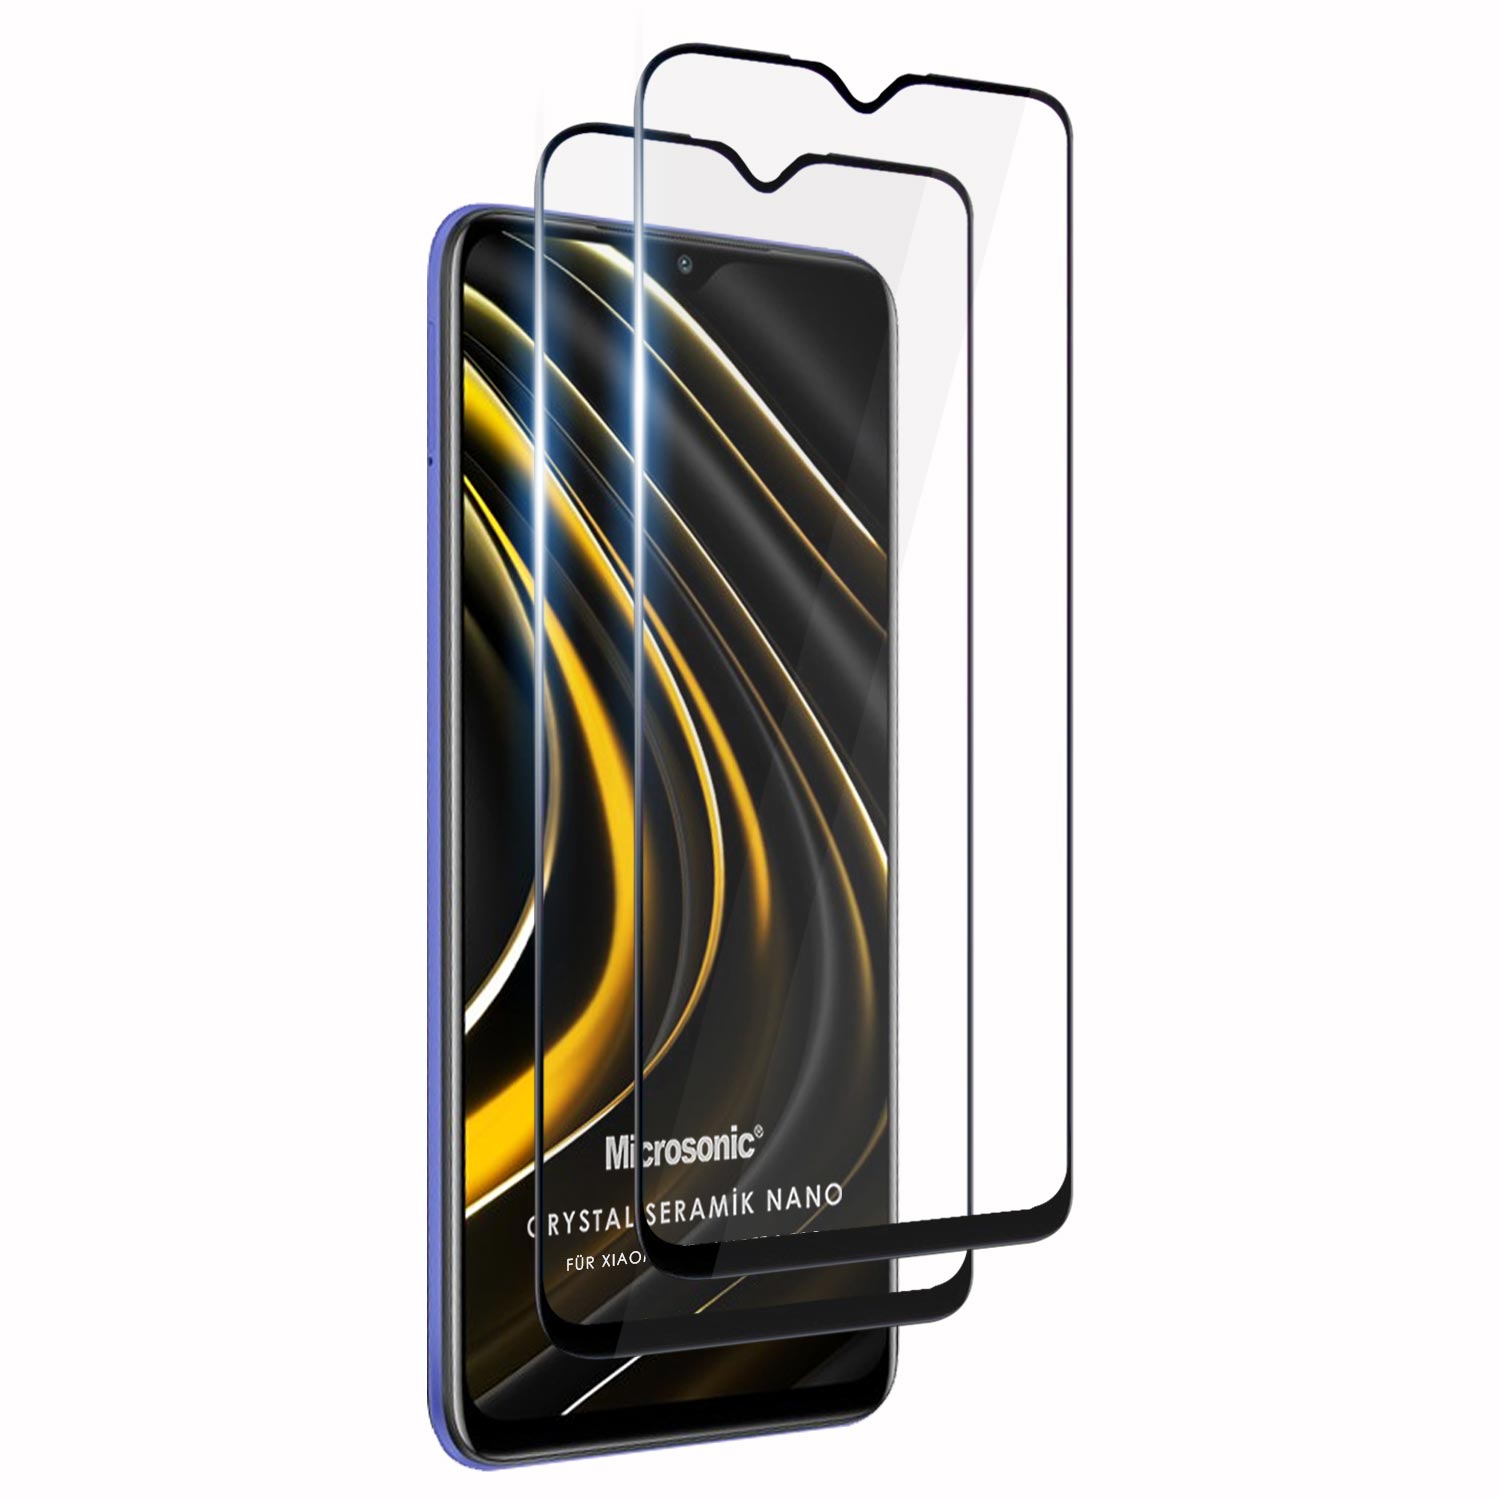 Microsonic Xiaomi Poco M3 Crystal Seramik Nano Ekran Koruyucu Siyah 2 Adet